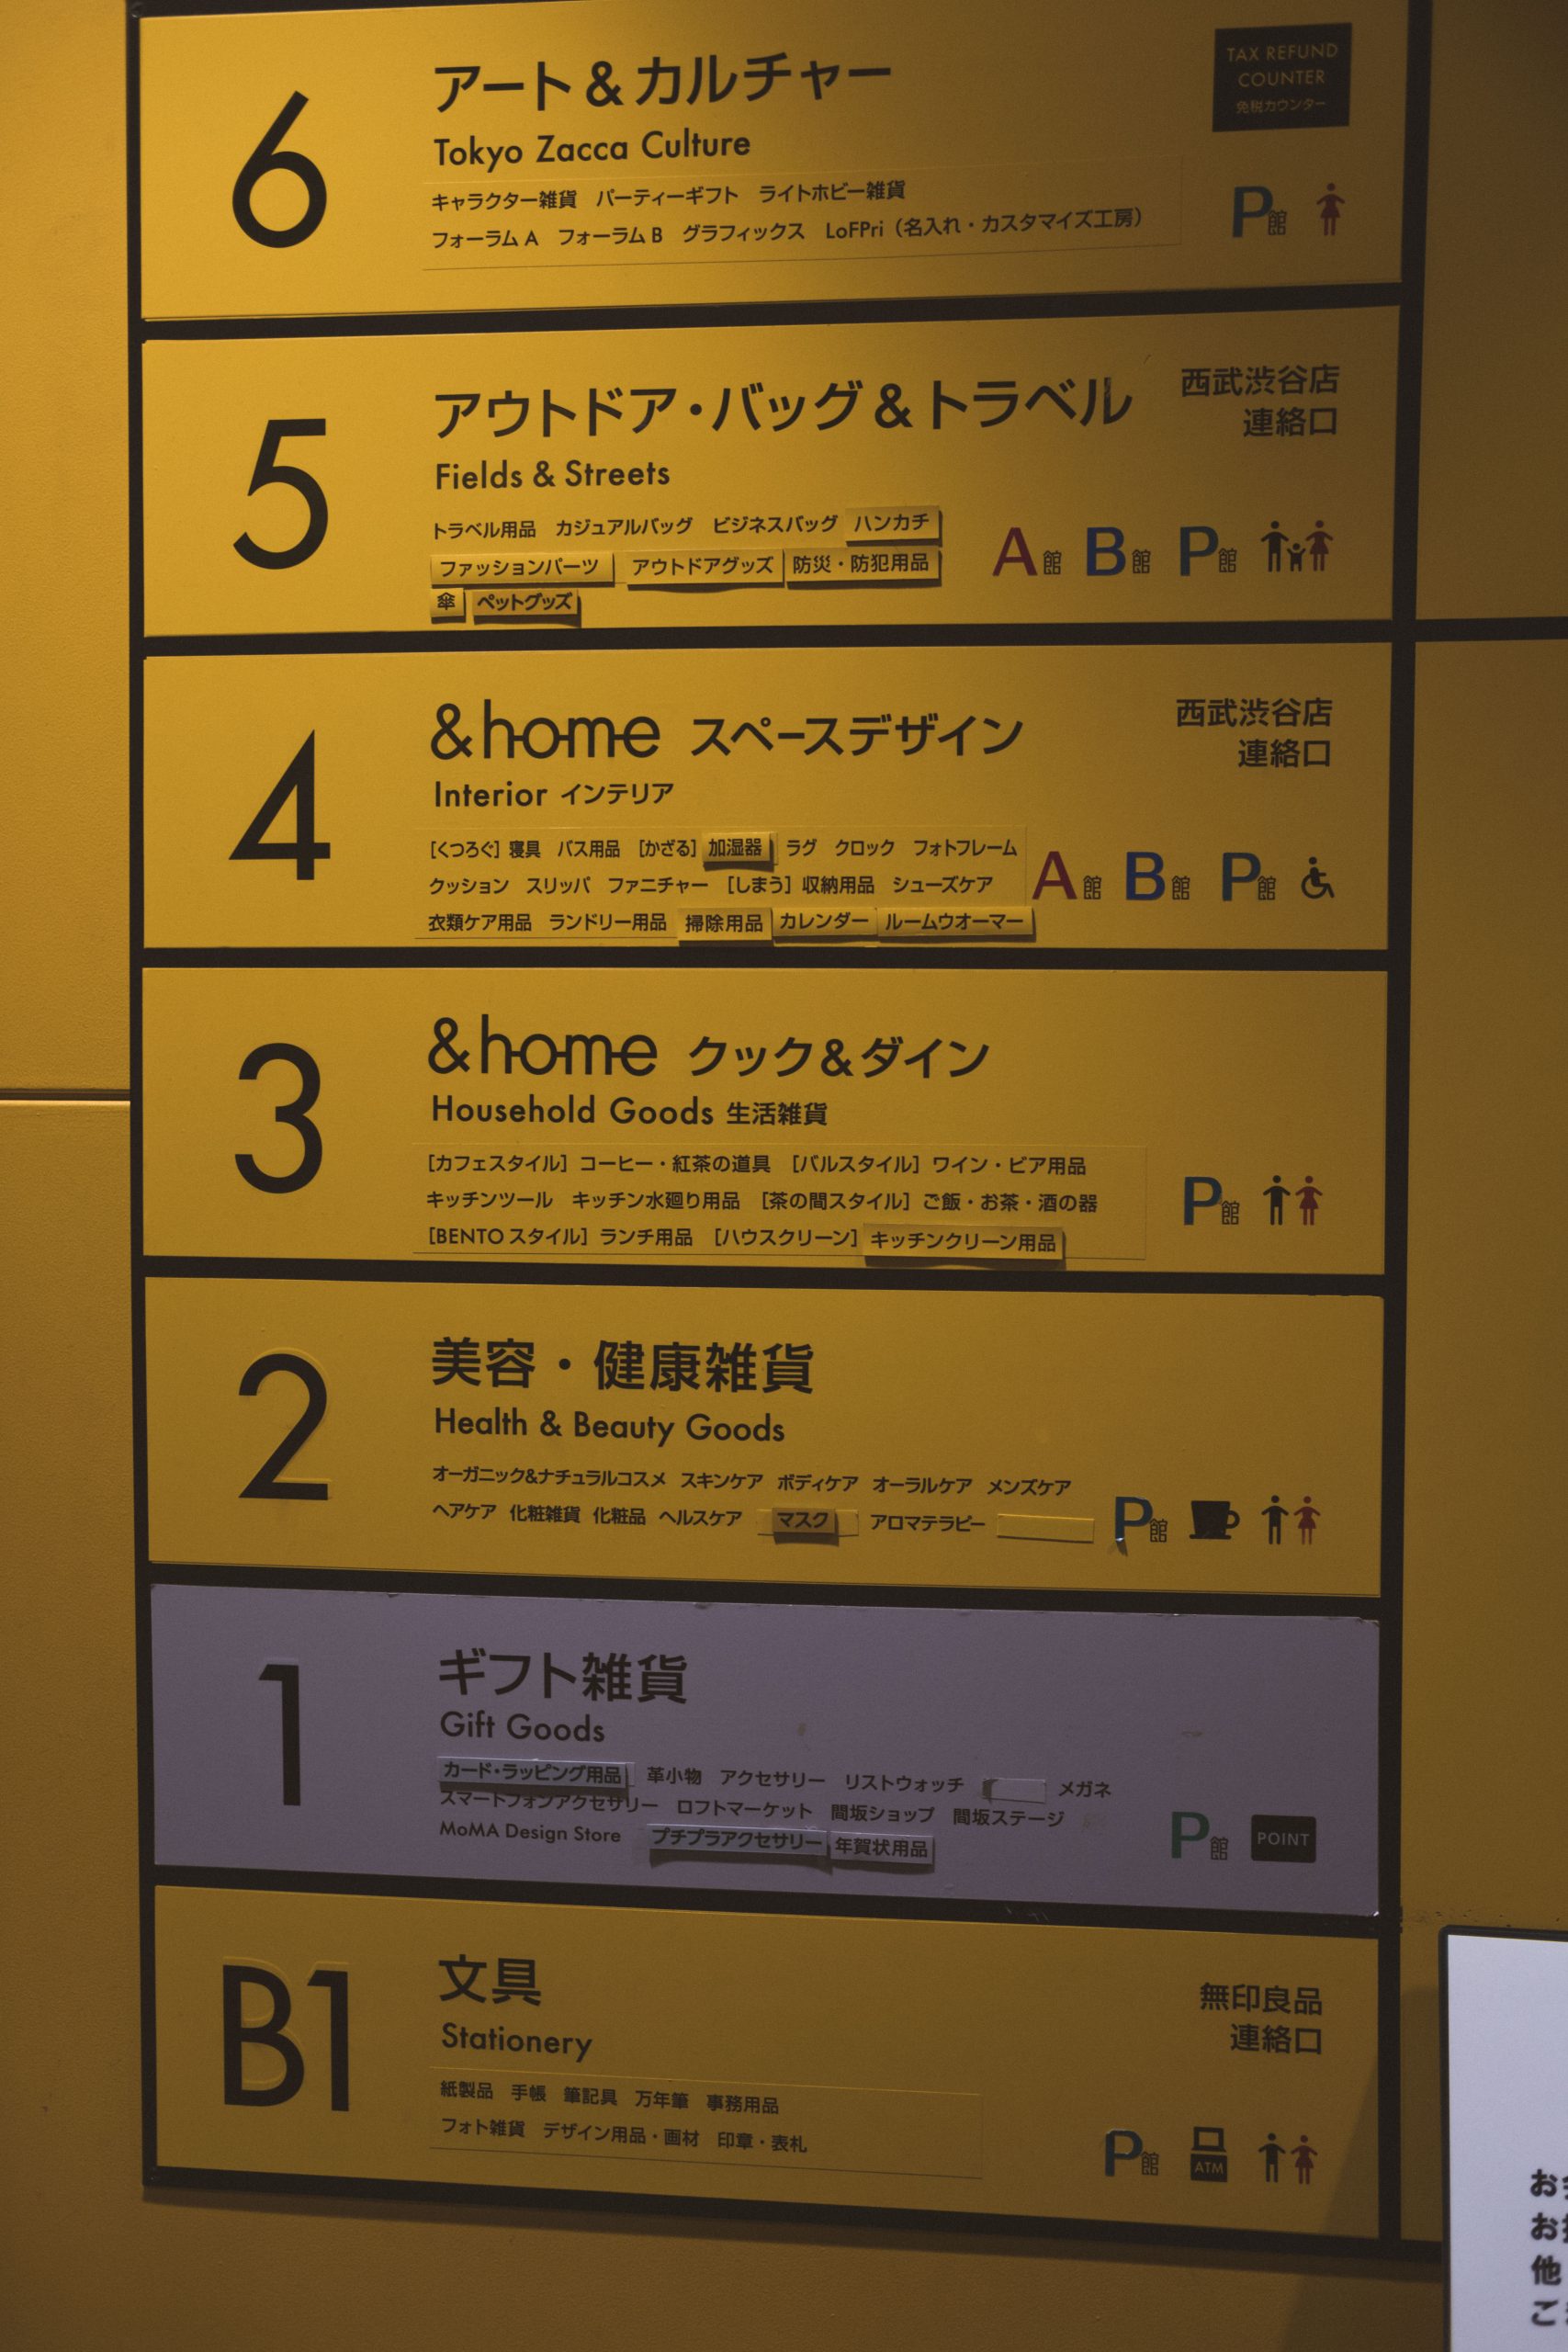 Loft store - information for each floor